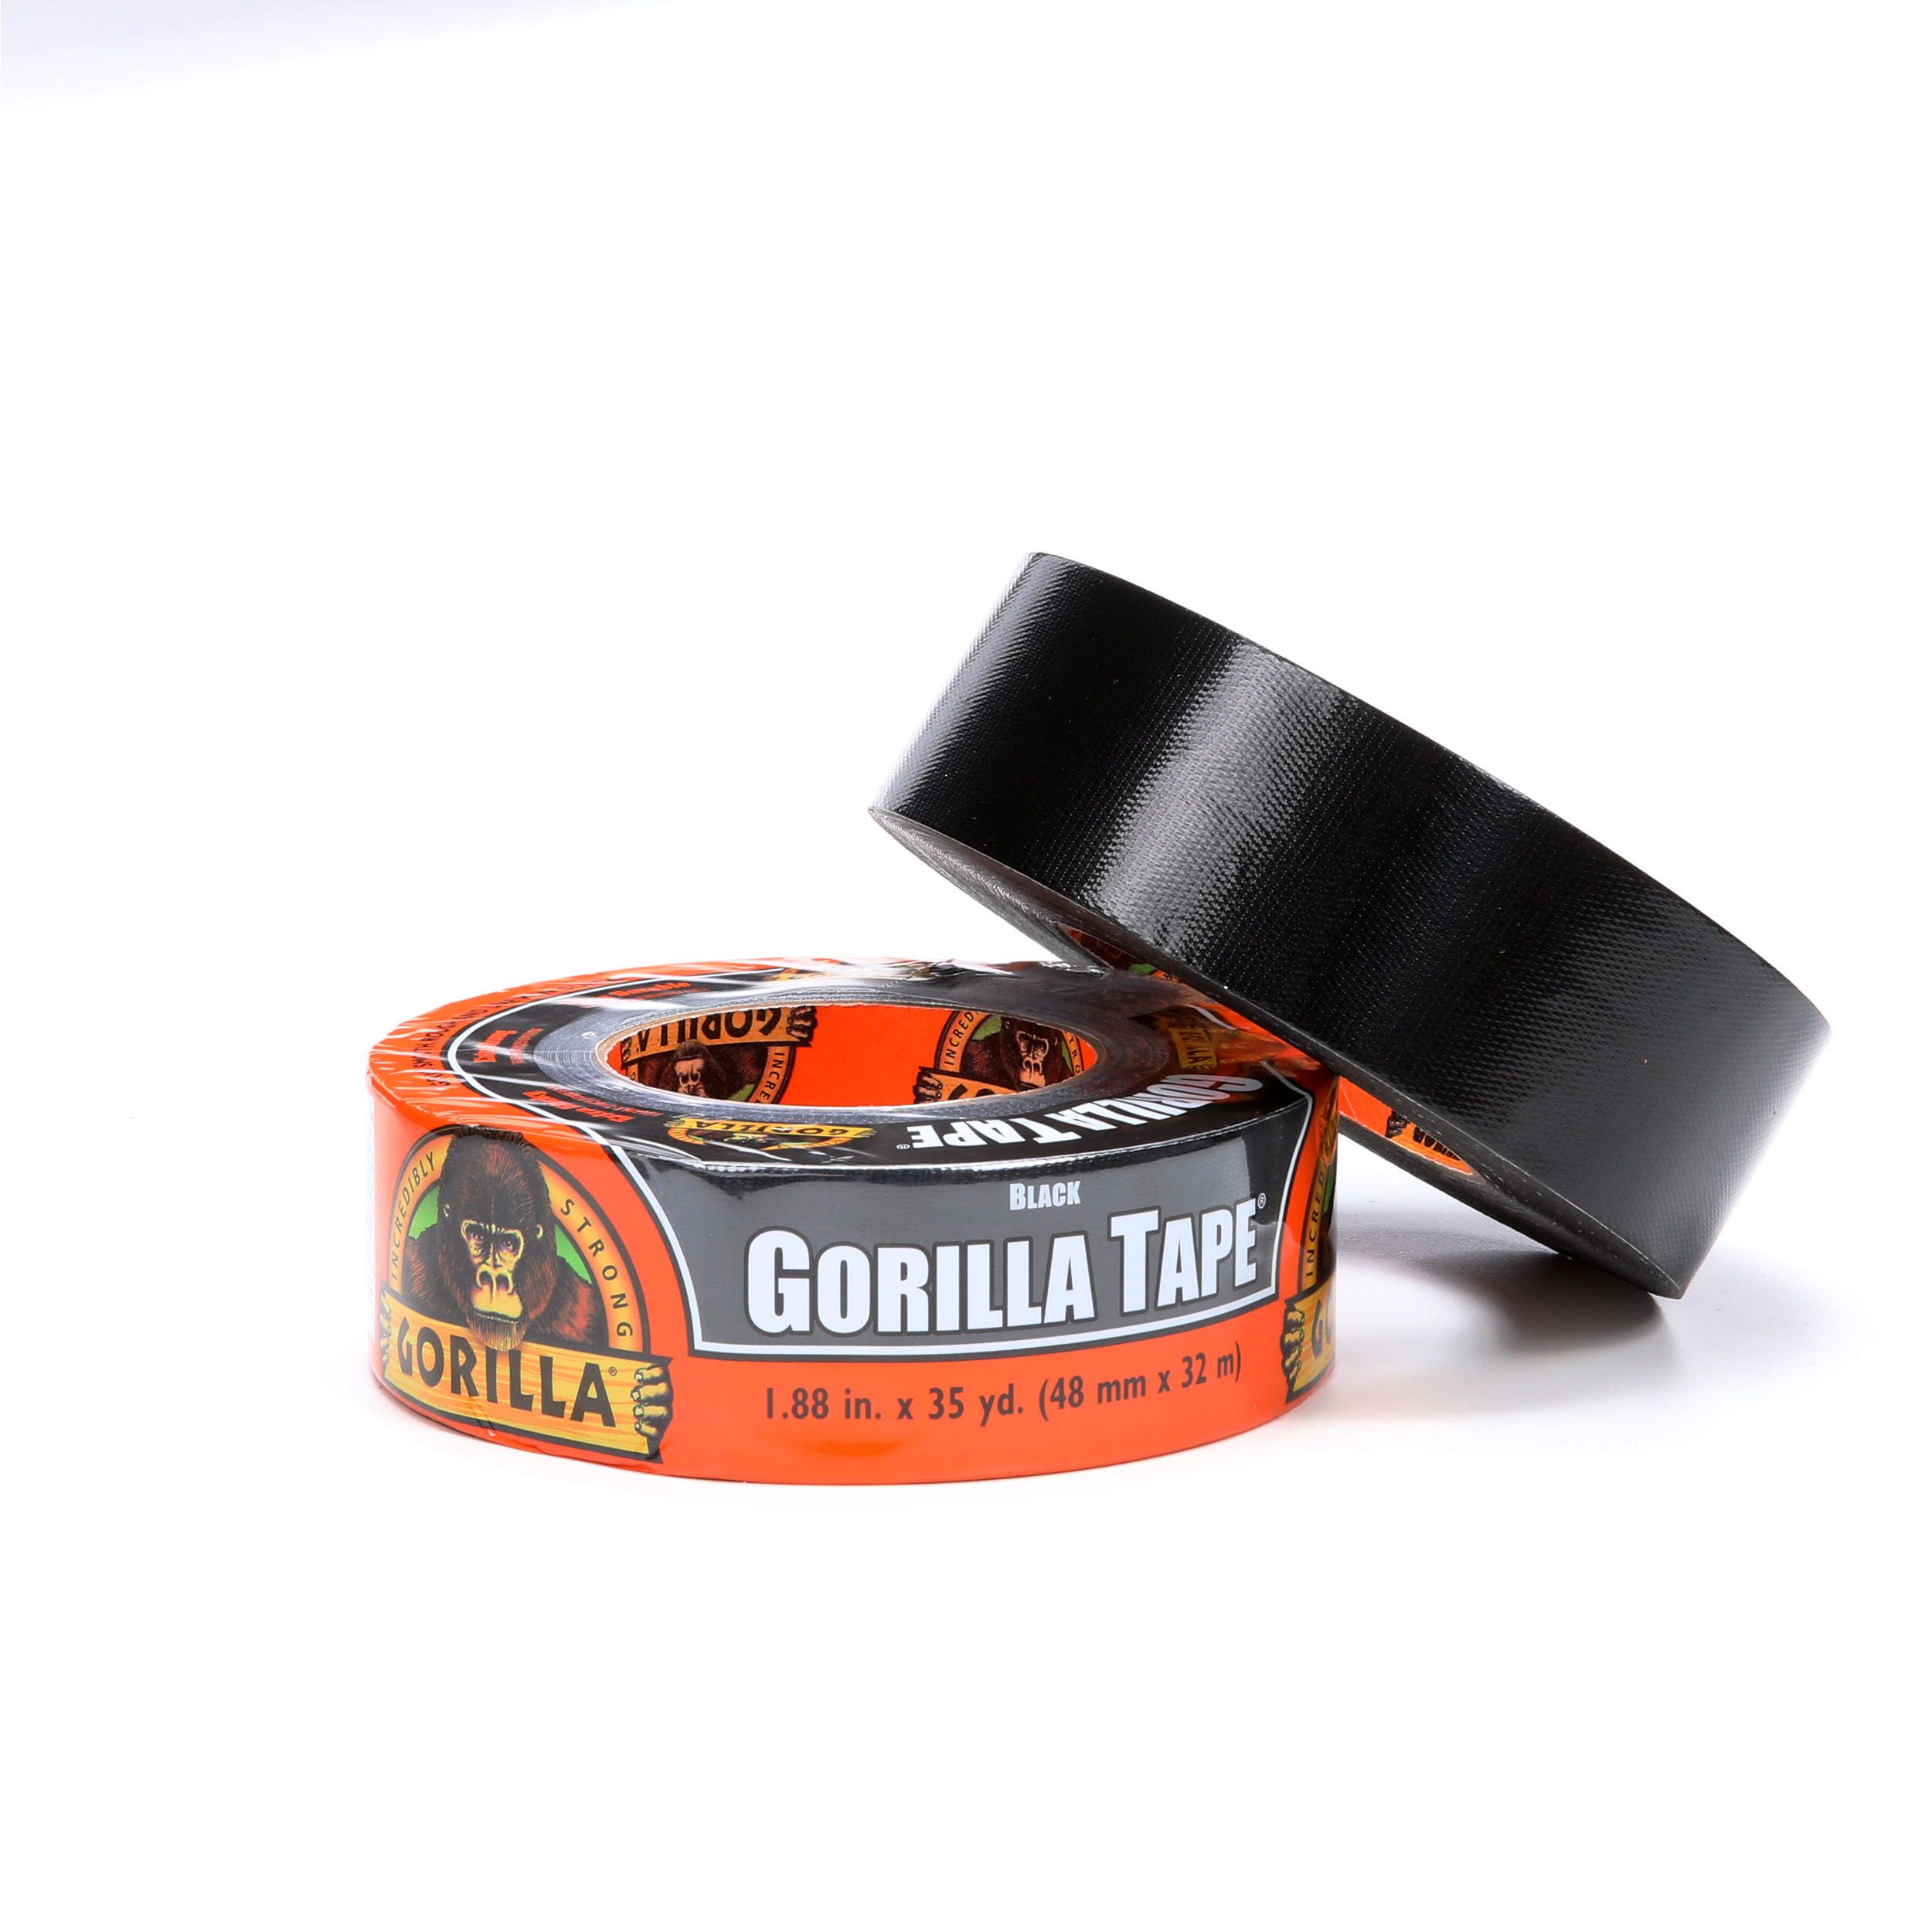 1.88" x 35 yd Gorilla Tape Black Pack of 1 Black Duct Tape 